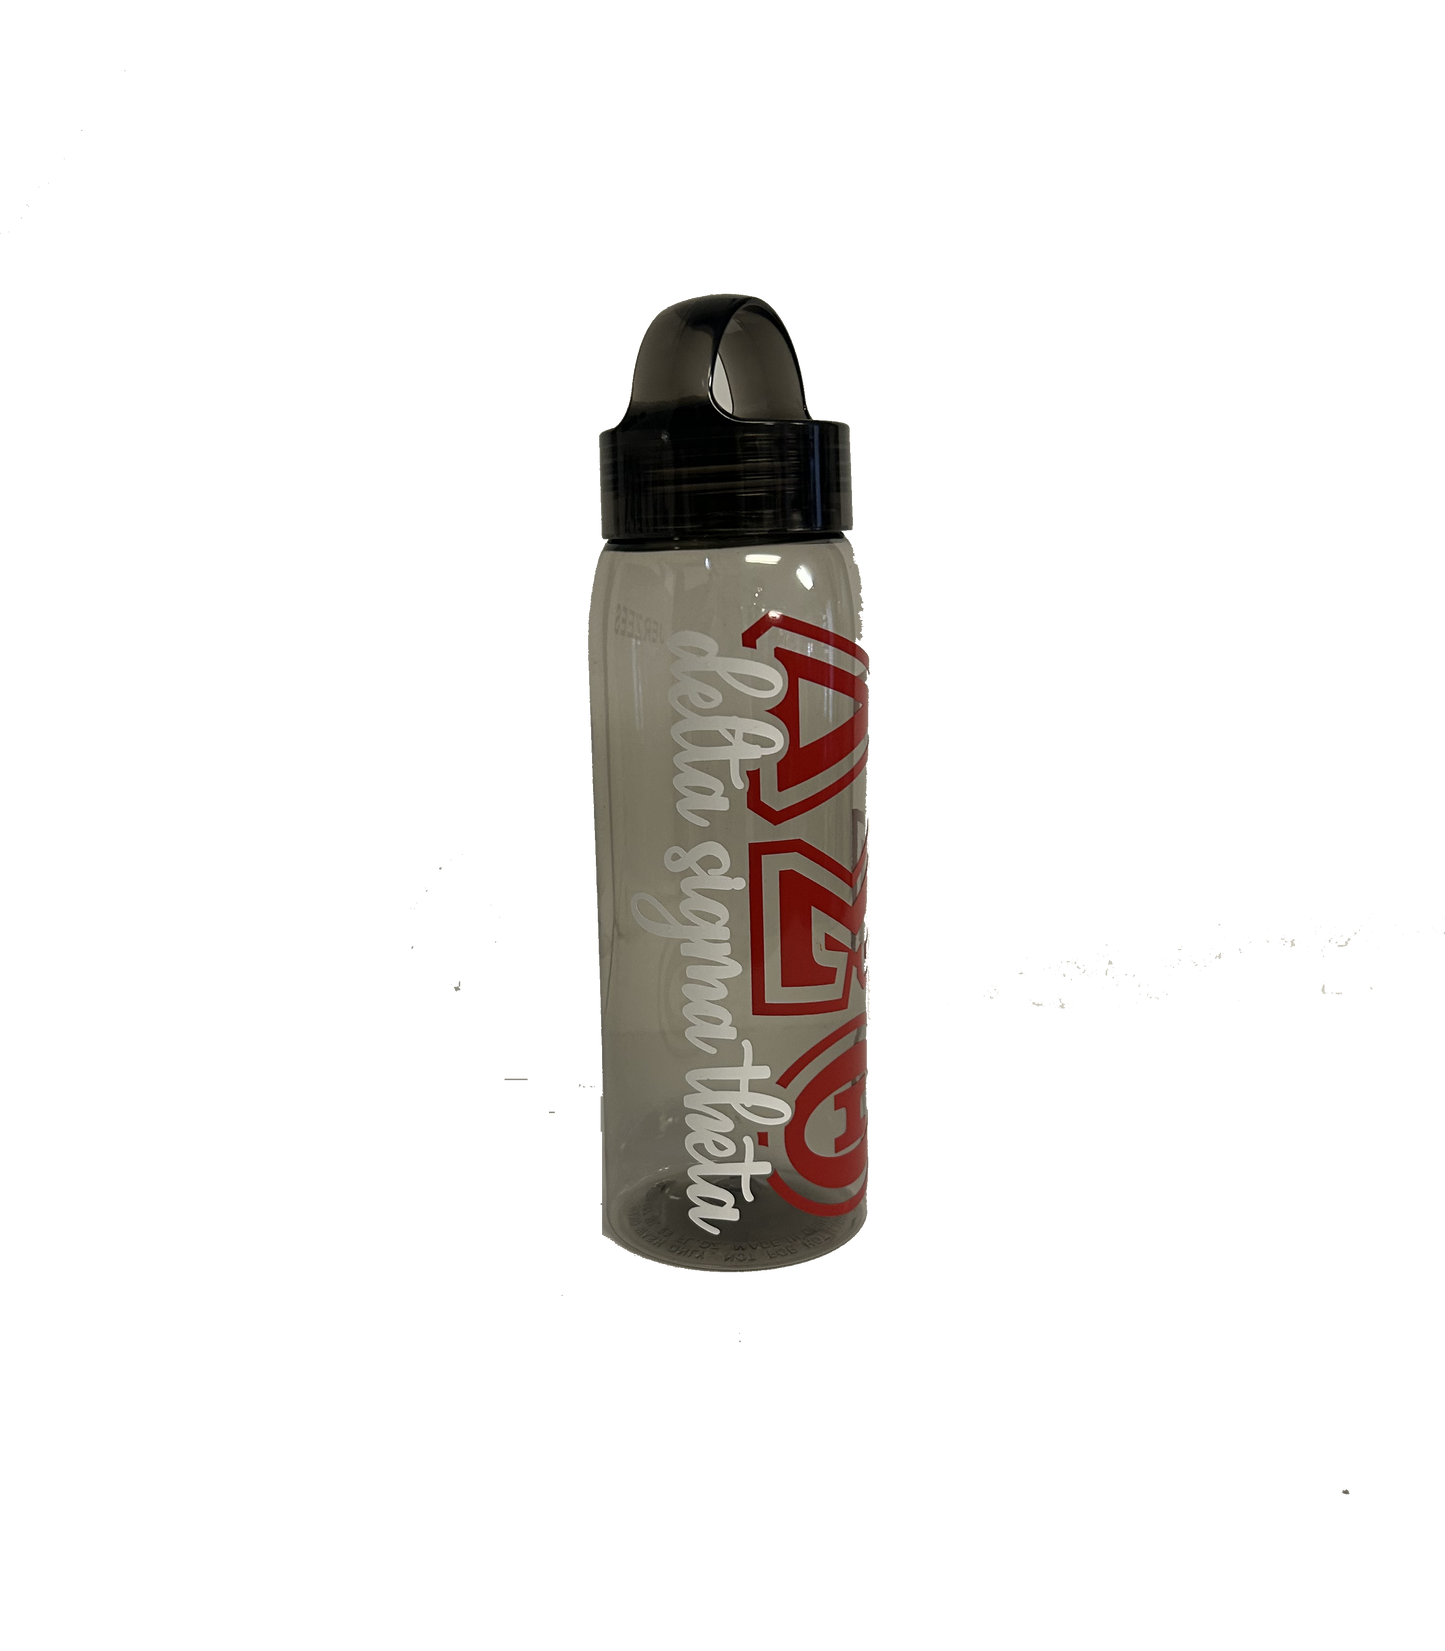 Delta Water Bottle - Plastic Black Bottle with Symbols